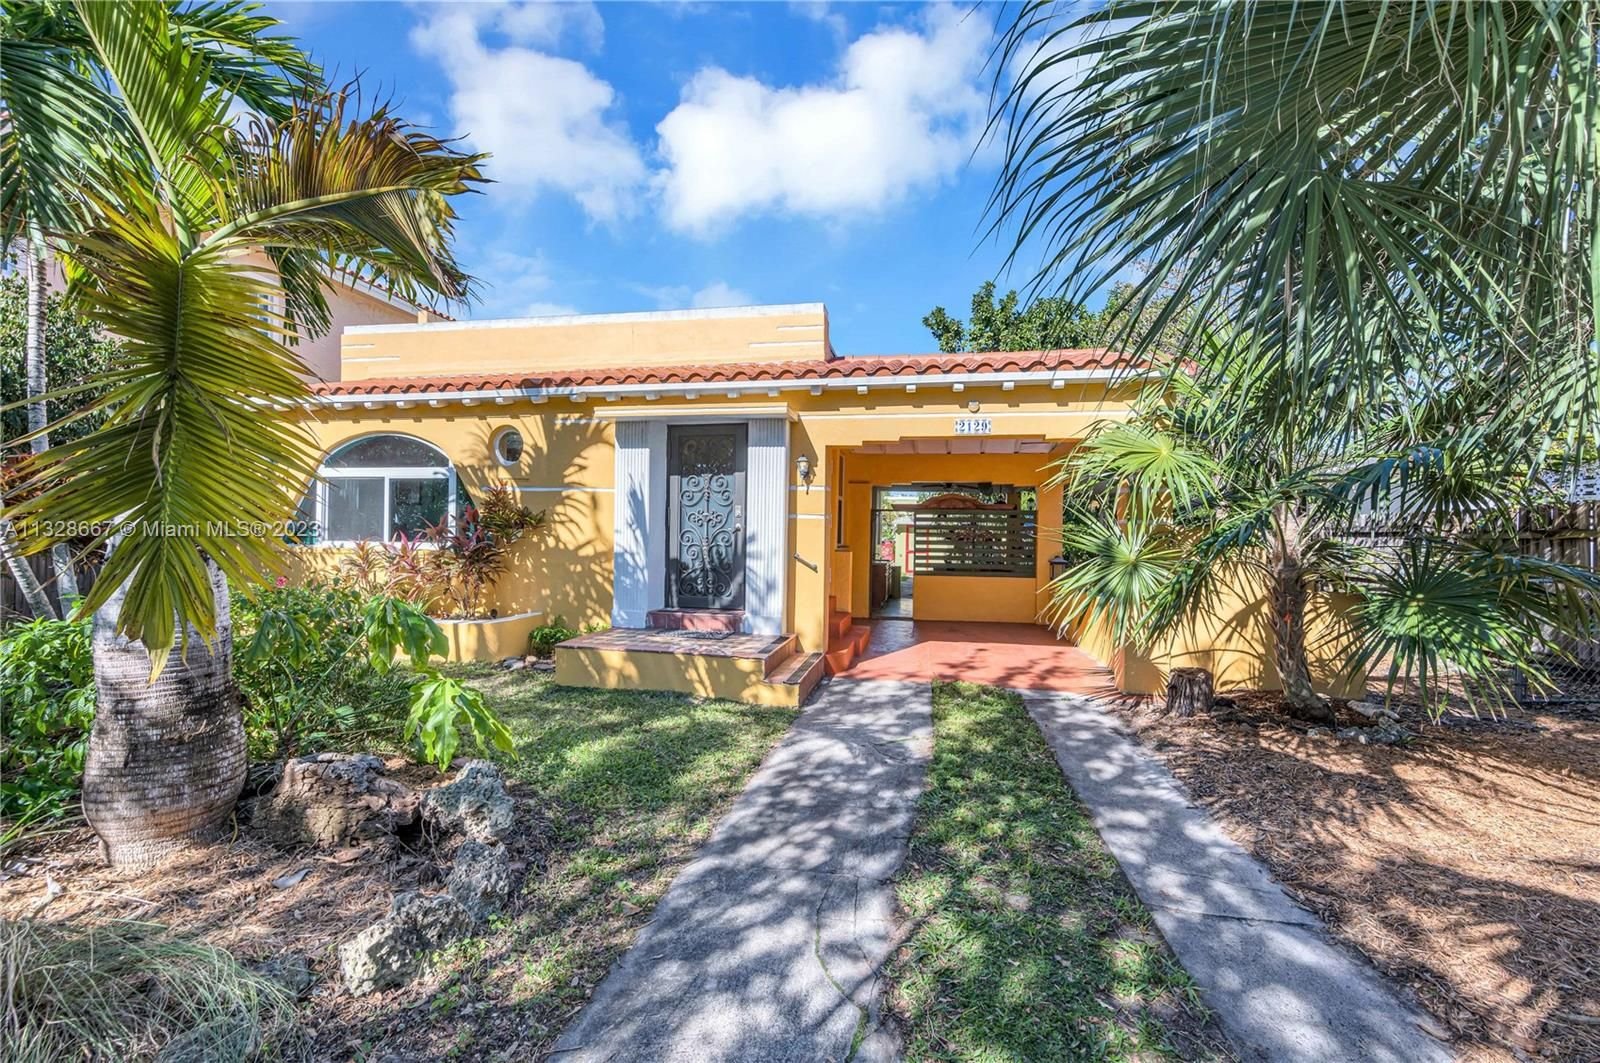 Real estate property located at 2129 12th St, Miami-Dade County, Miami, FL